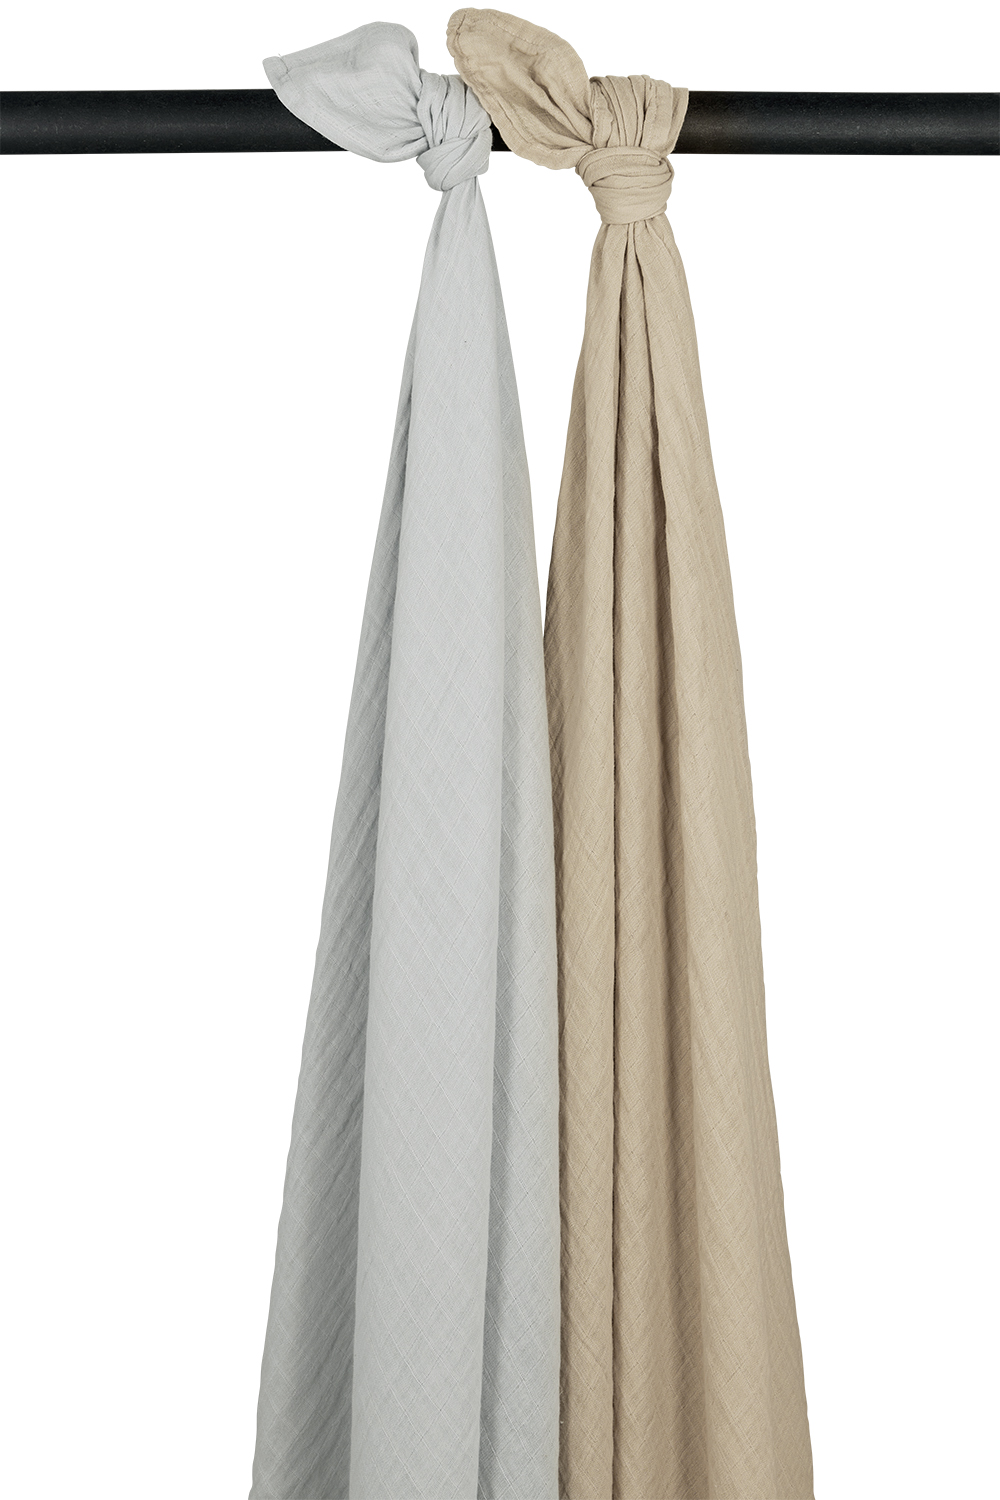 Swaddle 2-pack muslin Uni - light grey/sand - 120x120cm